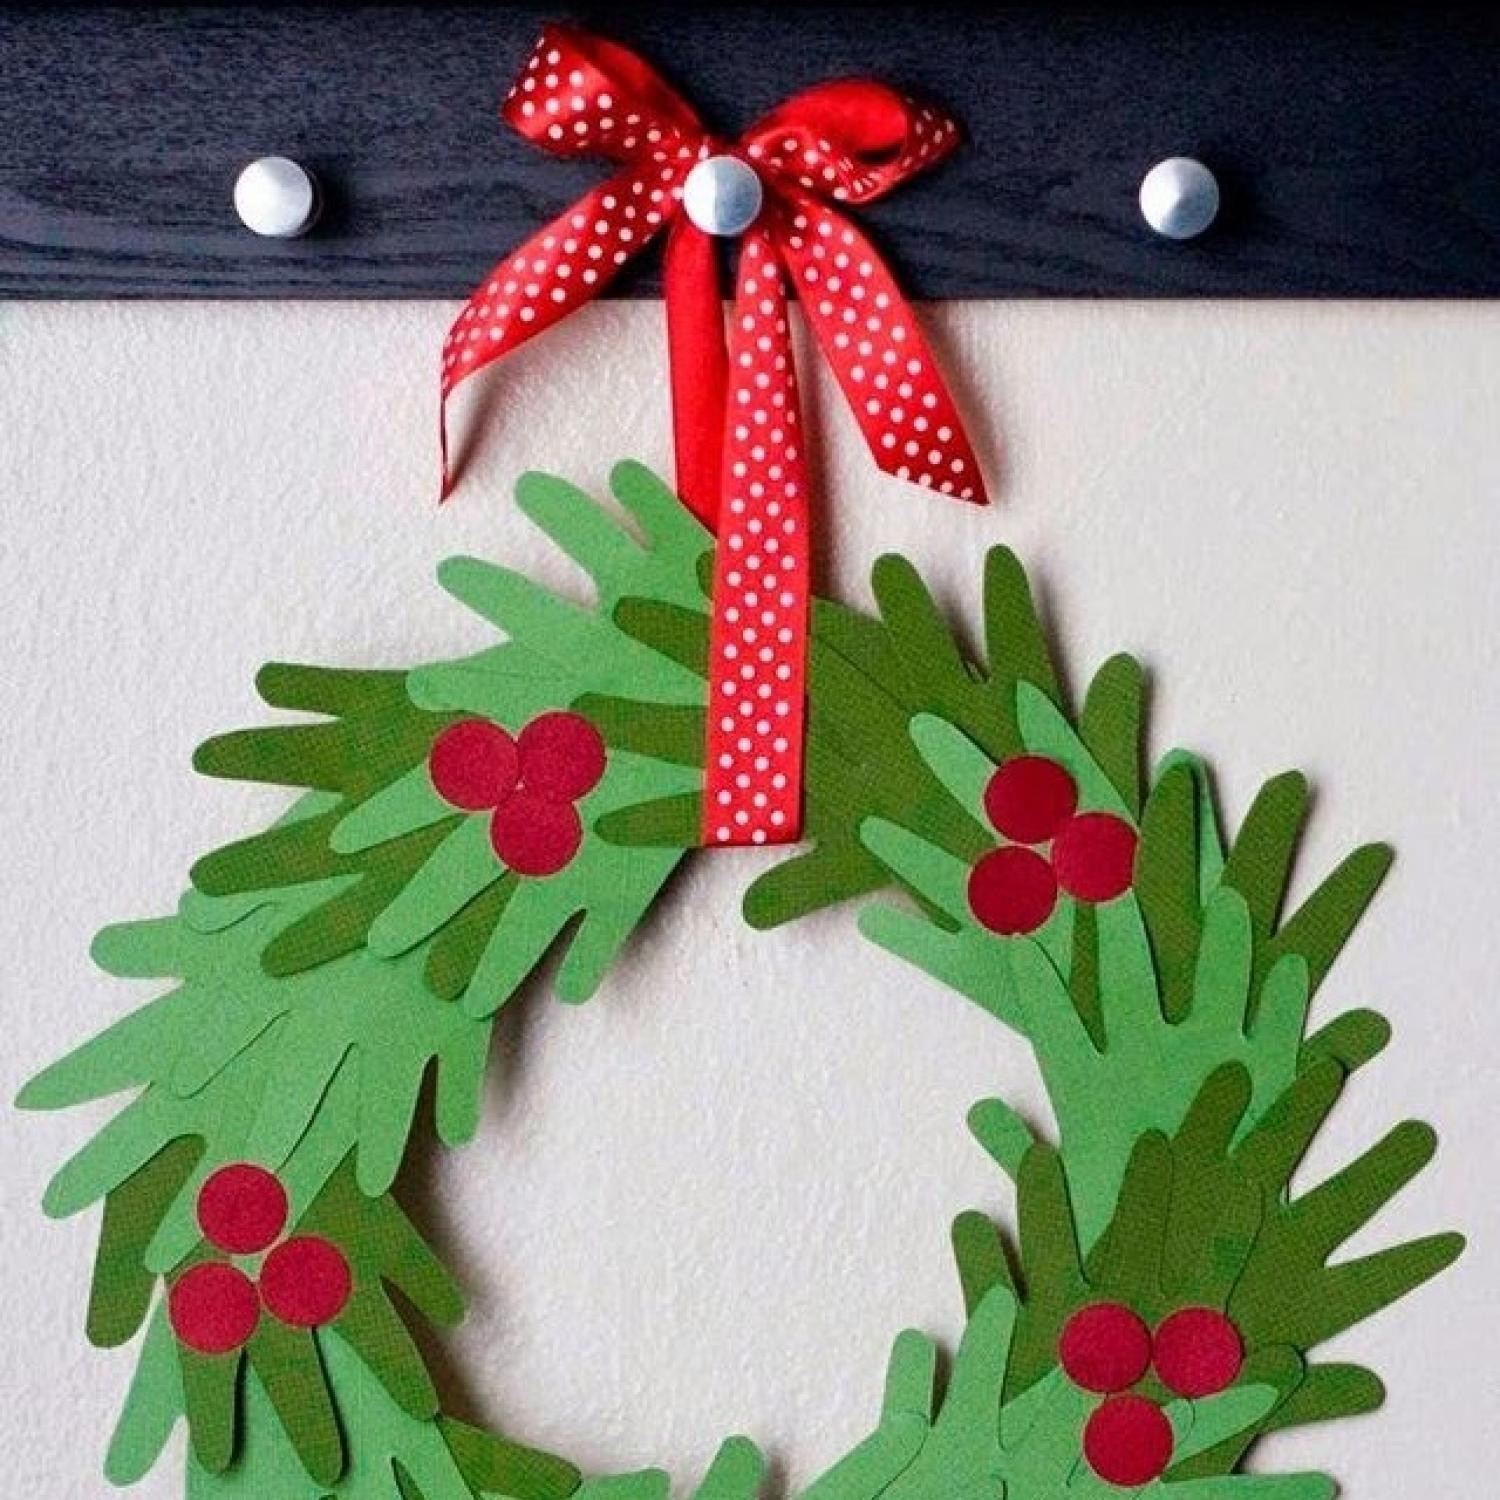 Christmas Craft Ideas For Preschoolers
 10 Handprint Christmas Crafts for Kids